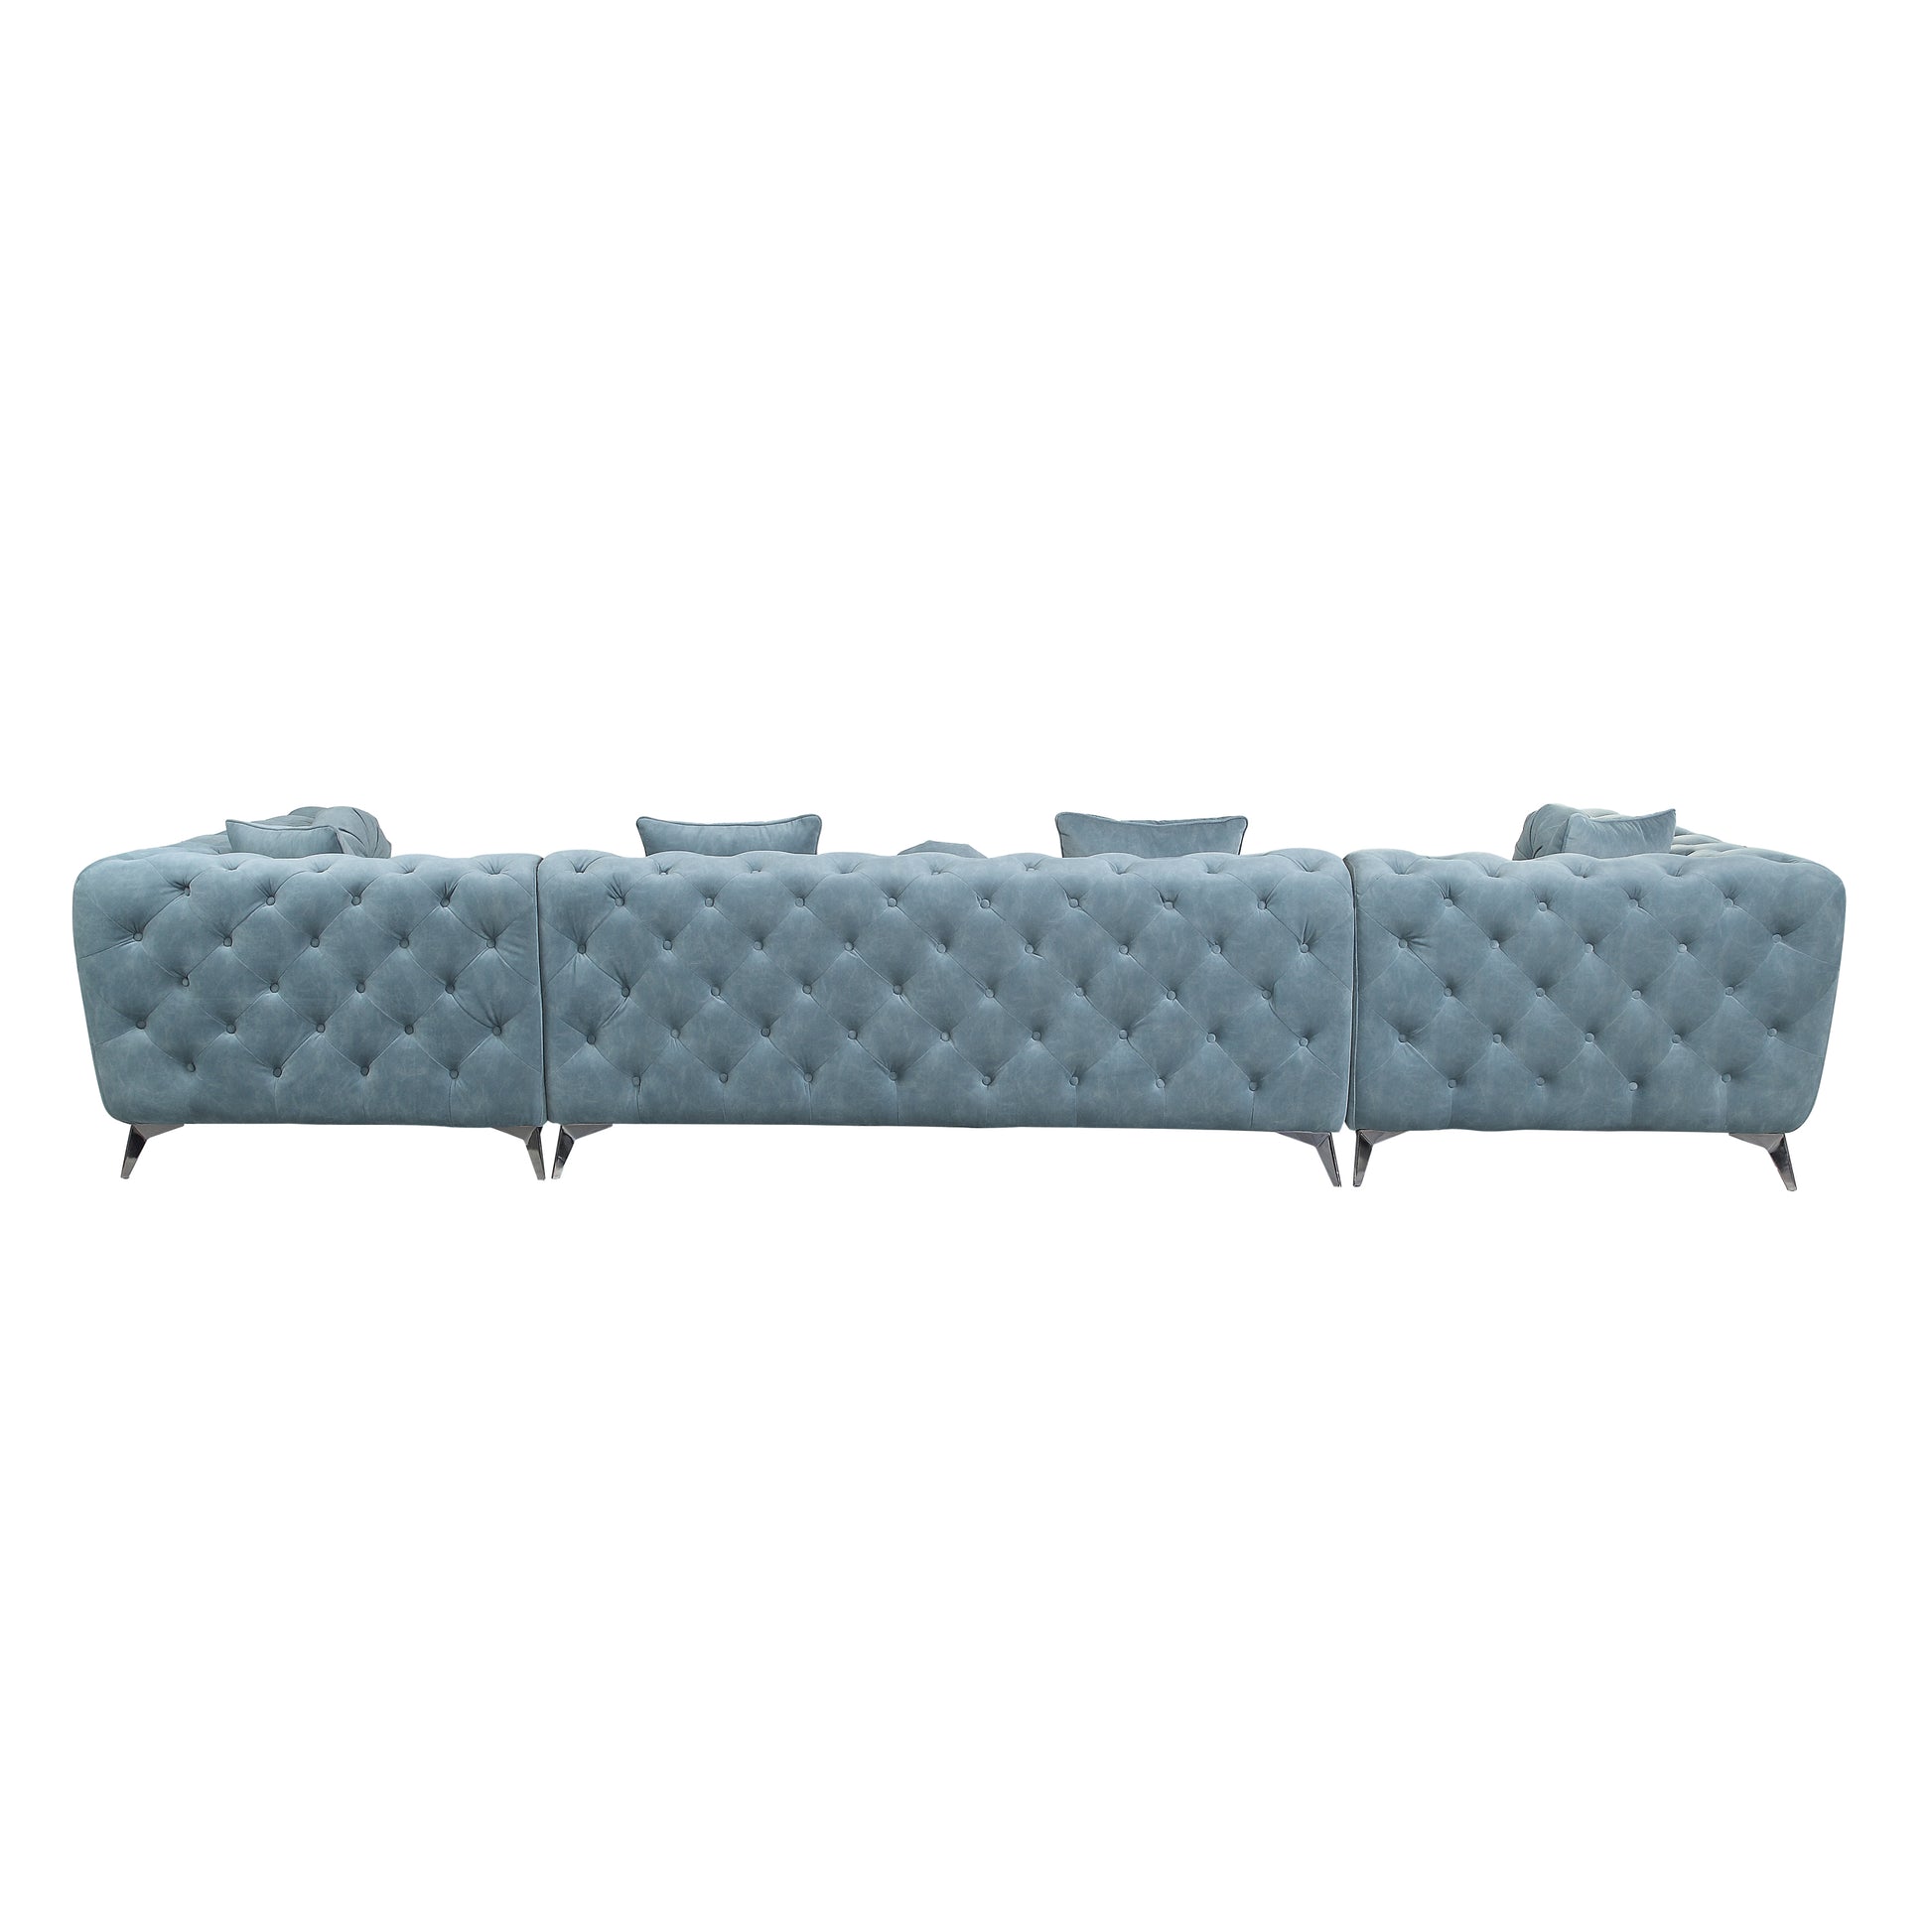 ACME Zerah SECTIONAL SOFA W/7 PILLOWS Deep Green Fabric LV01161 - Enova Luxe Home Store